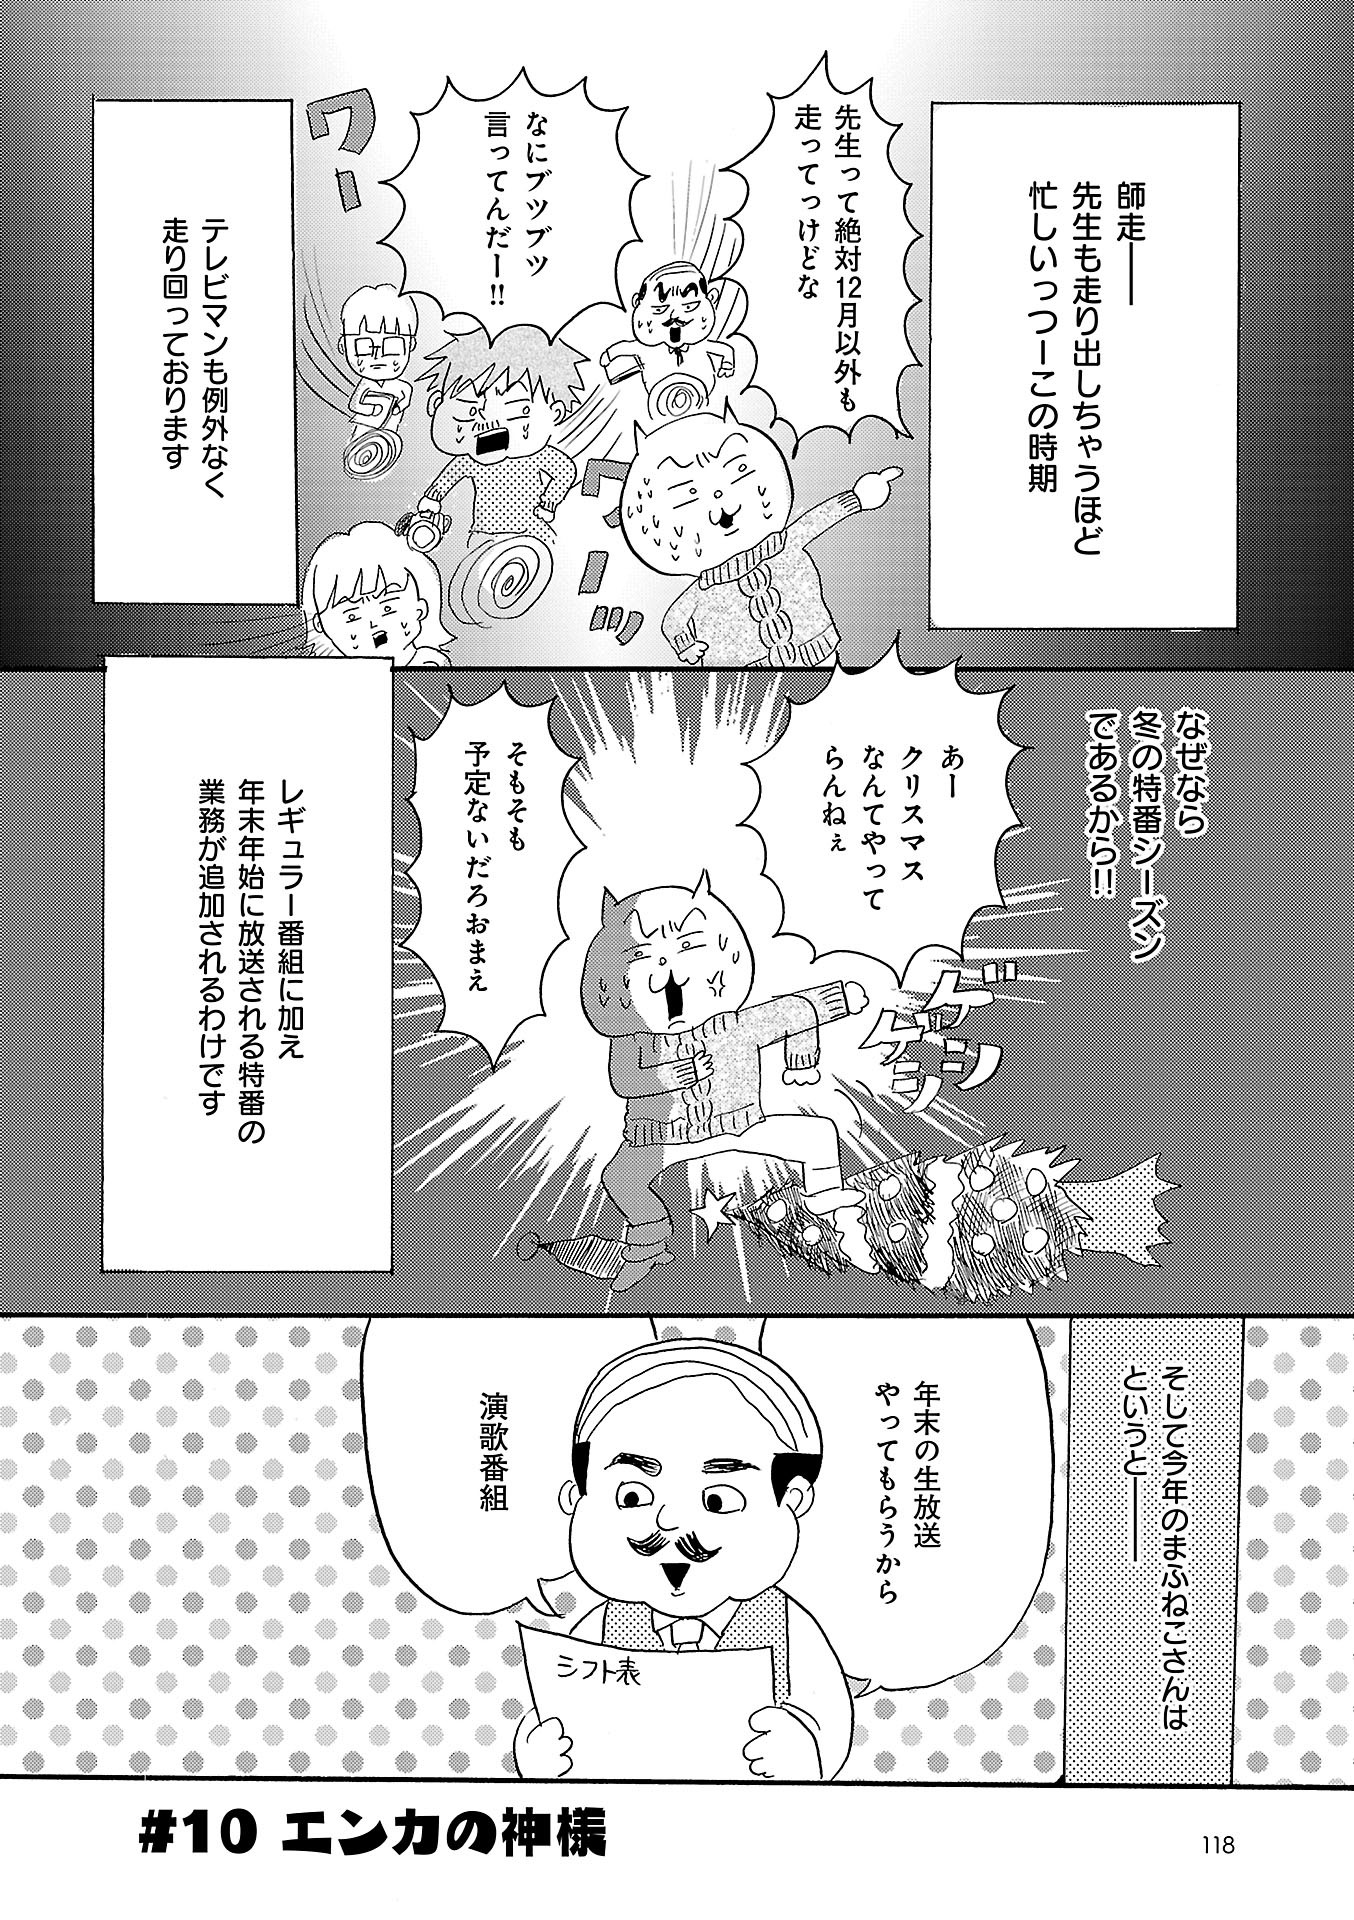 Tweets With Replies By 真船佳奈 オンエアできないアニメ放送中 Mafune Kana Twitter